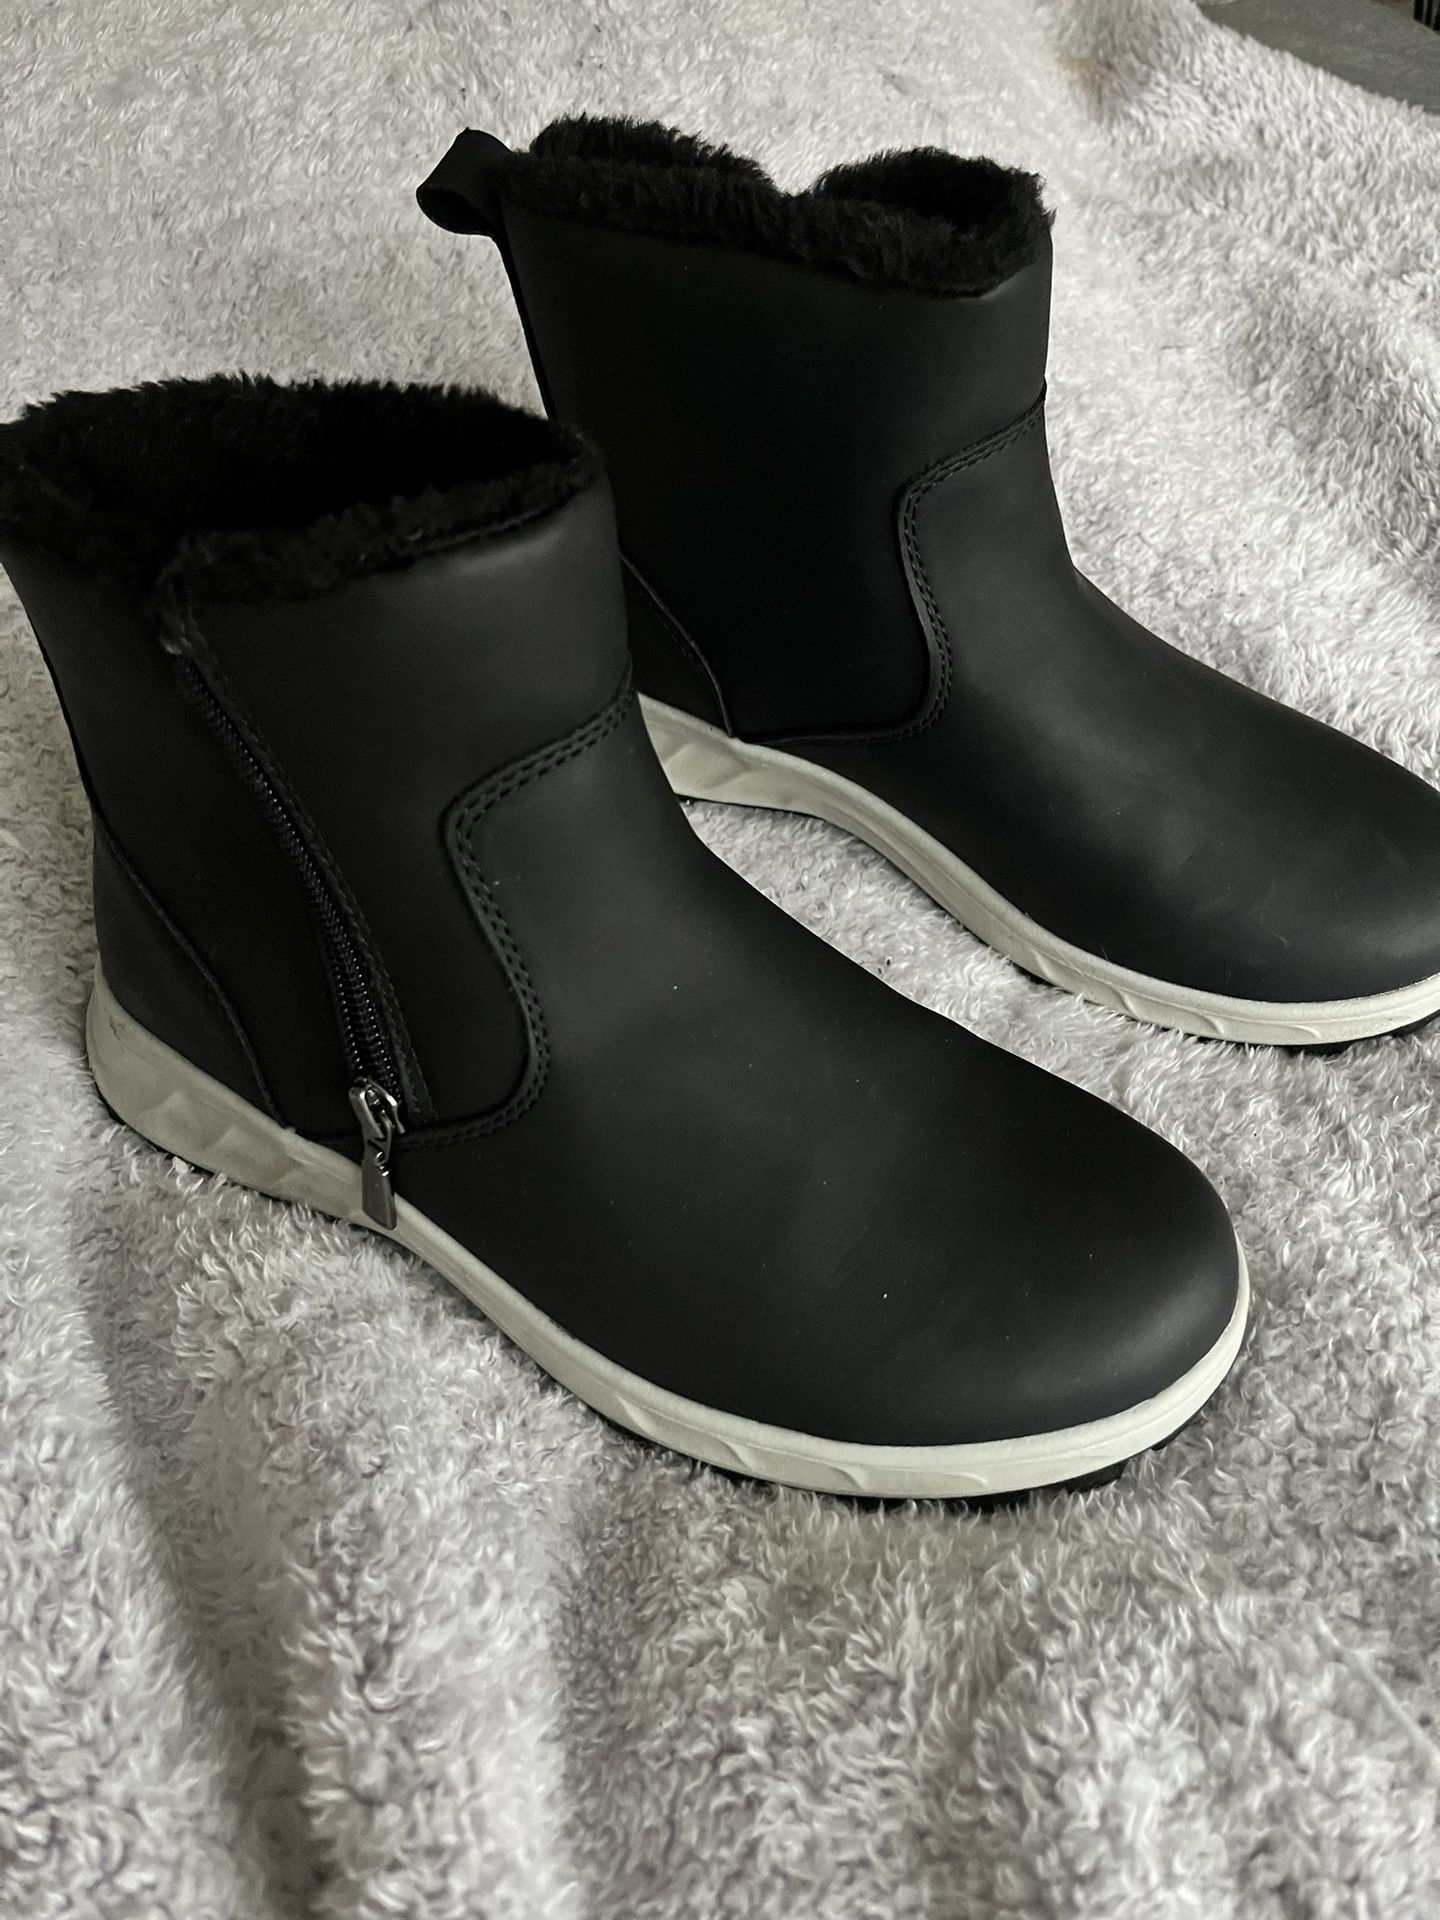 Rain & Snow Boots